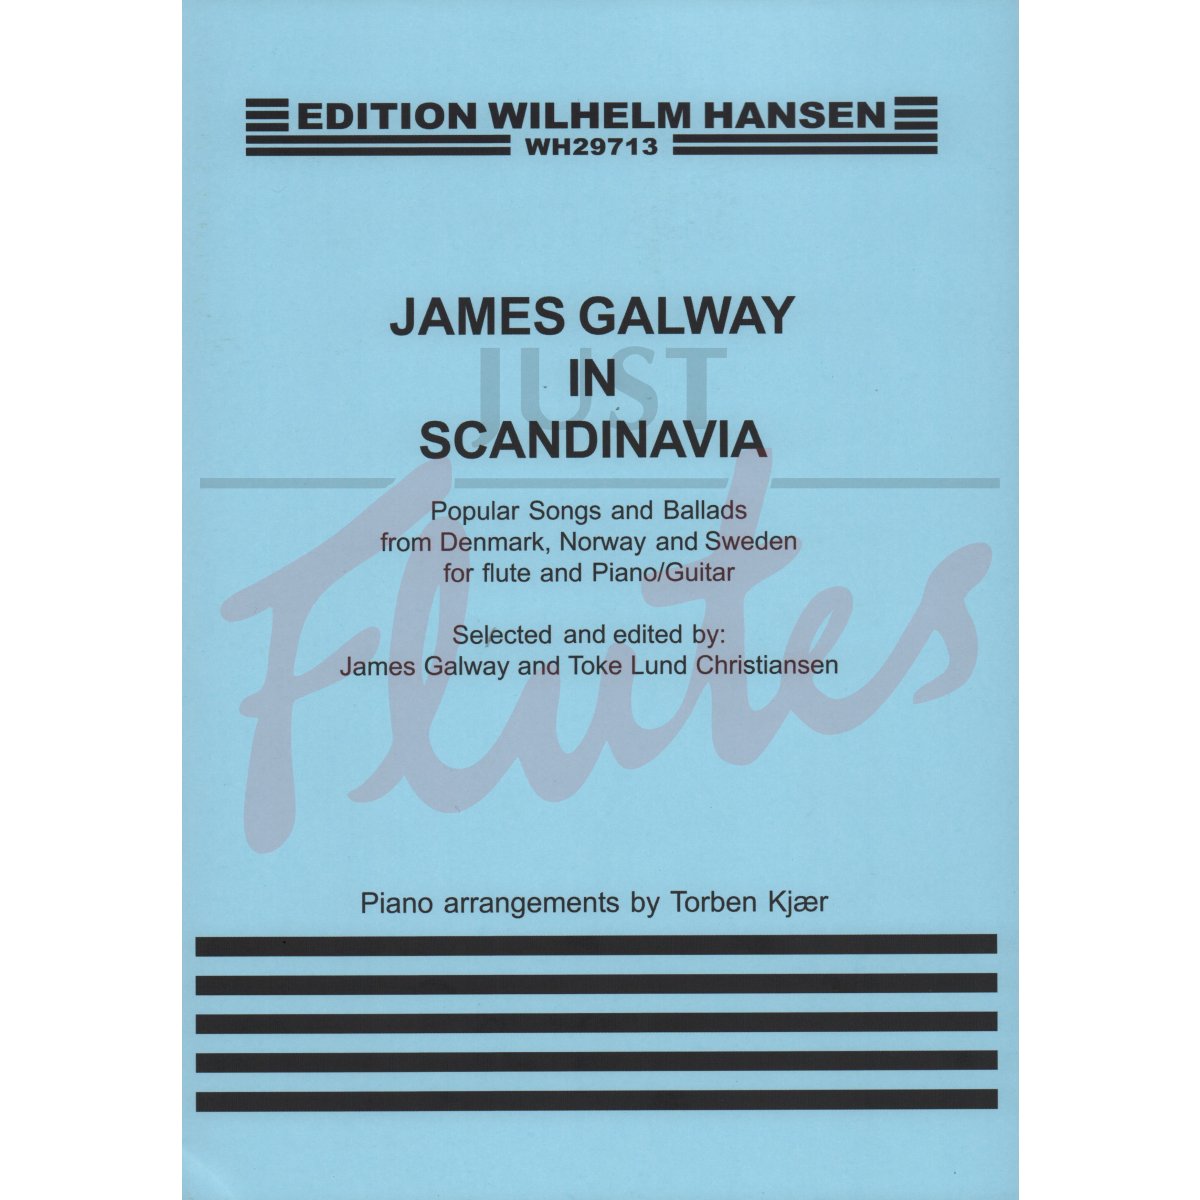 James Galway in Scandinavia (Popular Songs and Ballads)